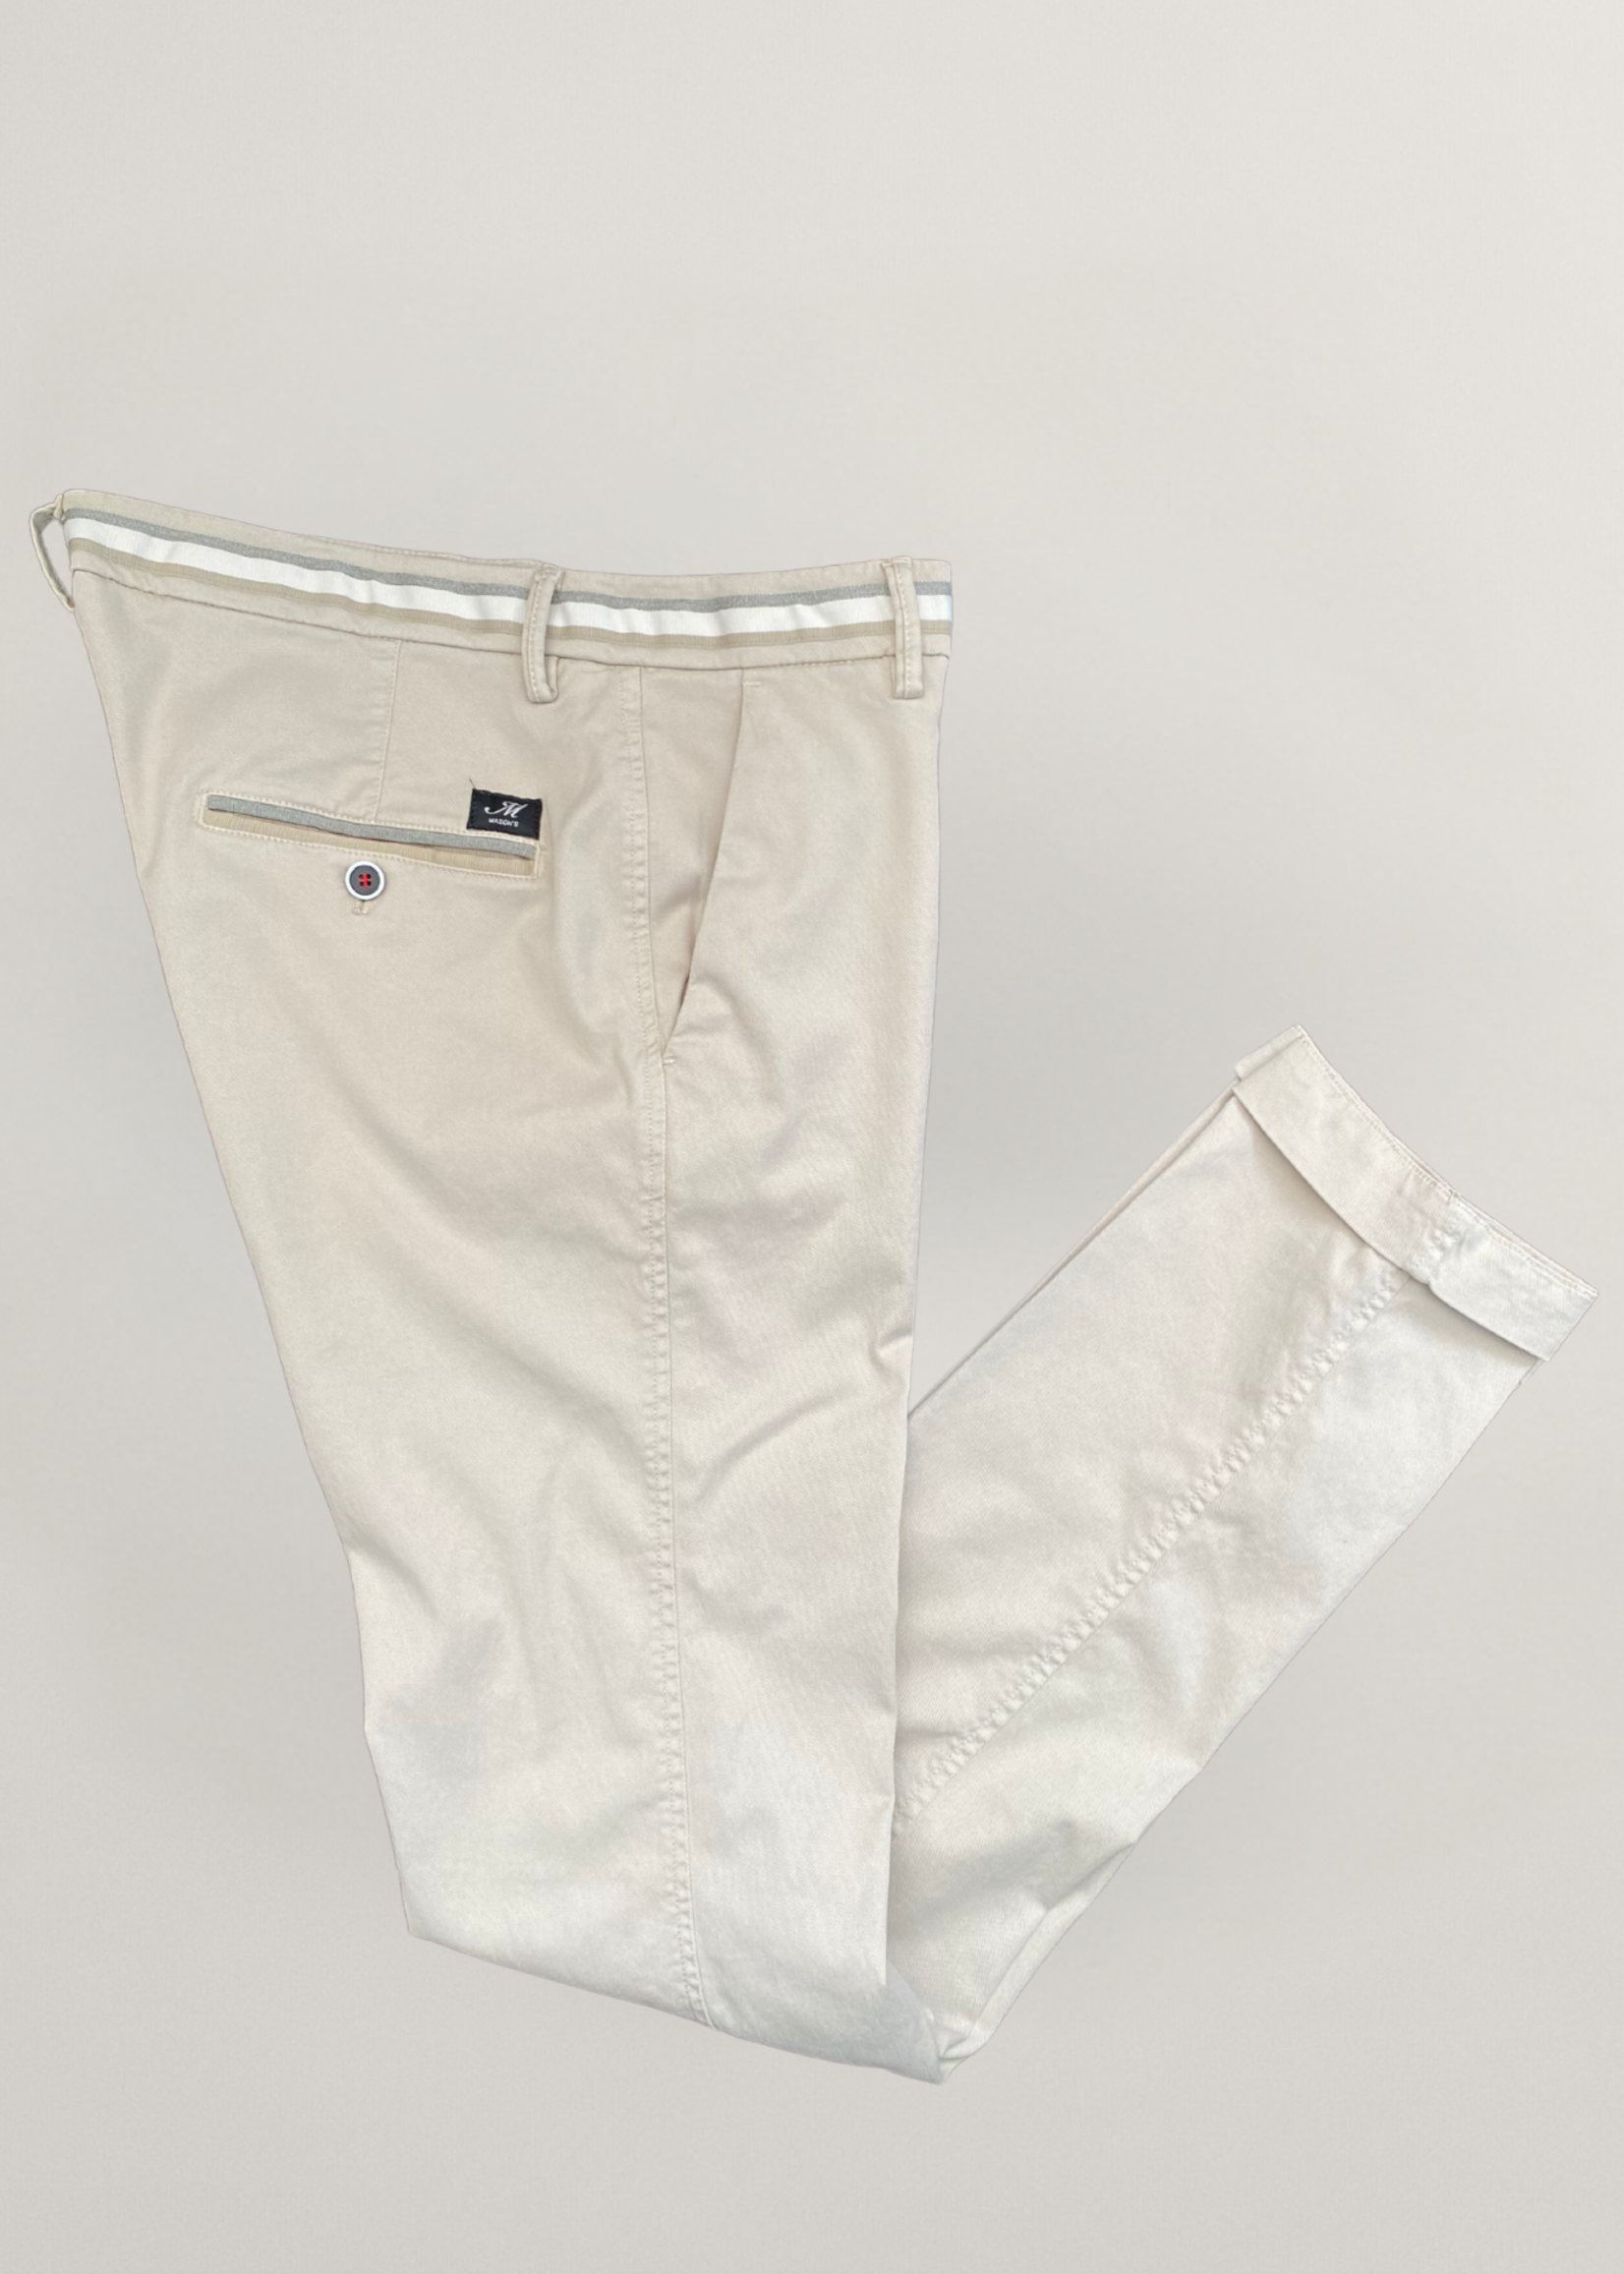 MASON'S Torino Summer pantalon chino homme en coton et tencel avec rubans slim - Beige